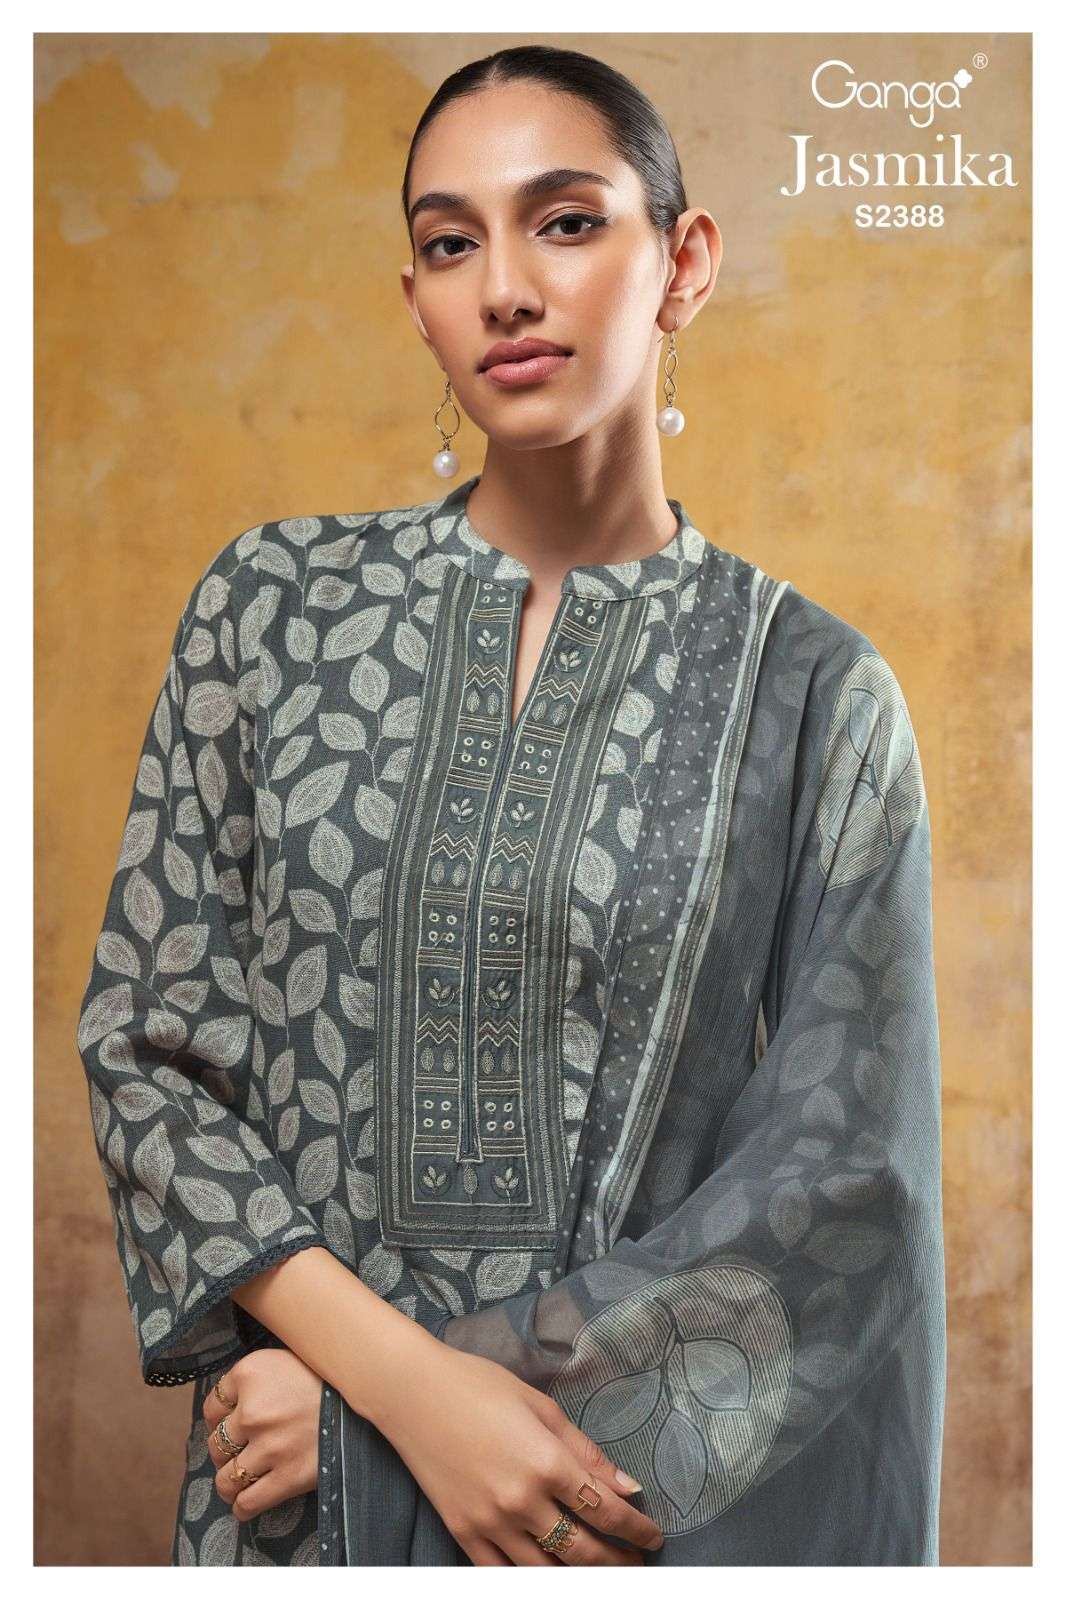 Ganga Jasmika 2388 Fancy Linen Cotton Salwar Suit Online Catalog Wholesales